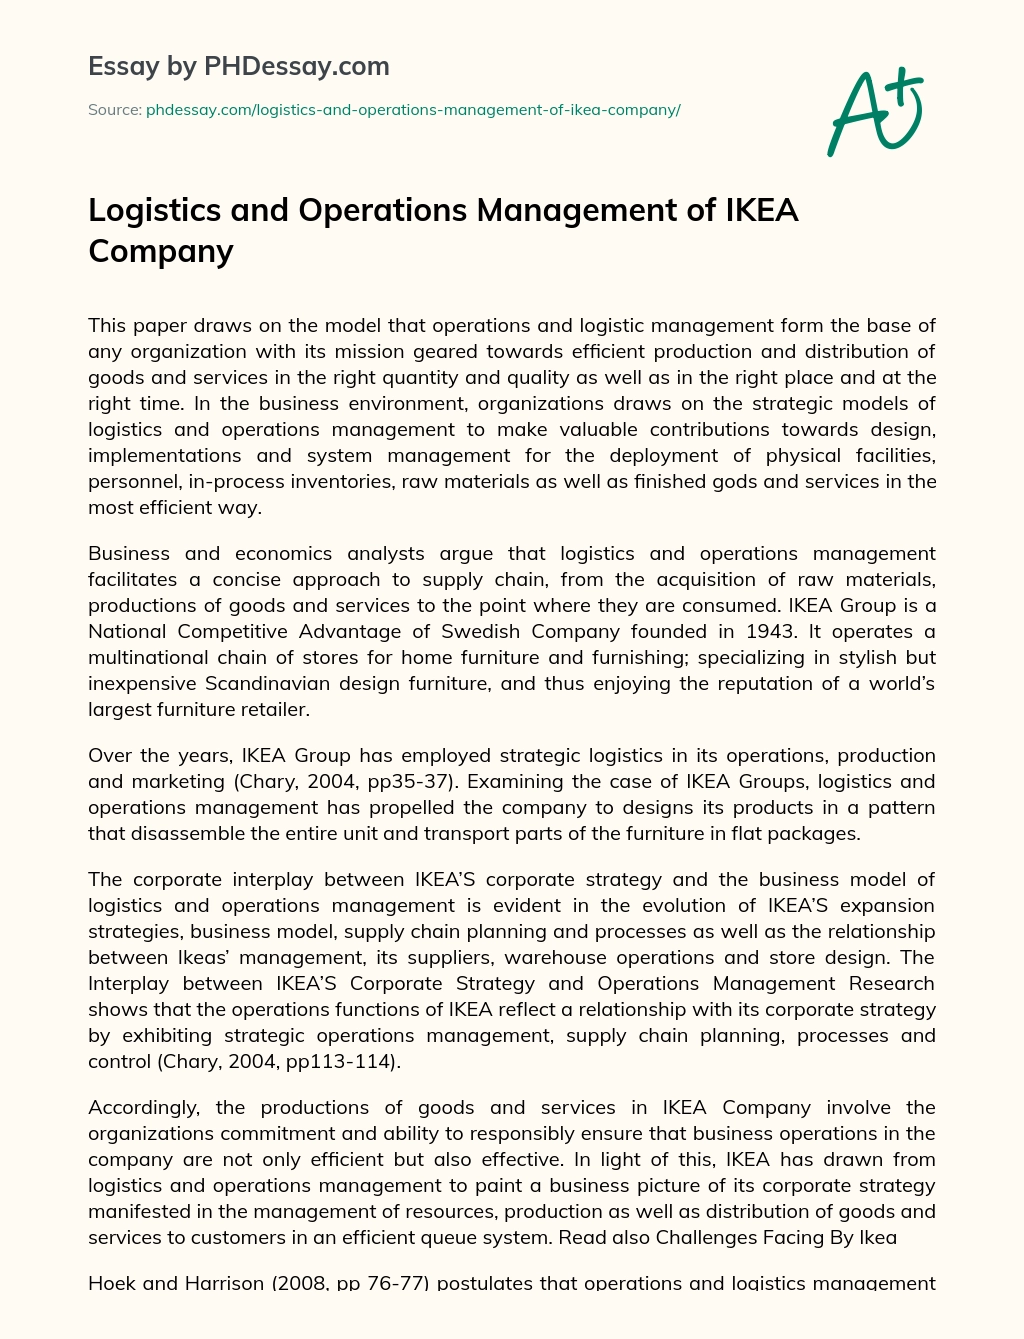 Logistics and Operations Management of IKEA Company essay